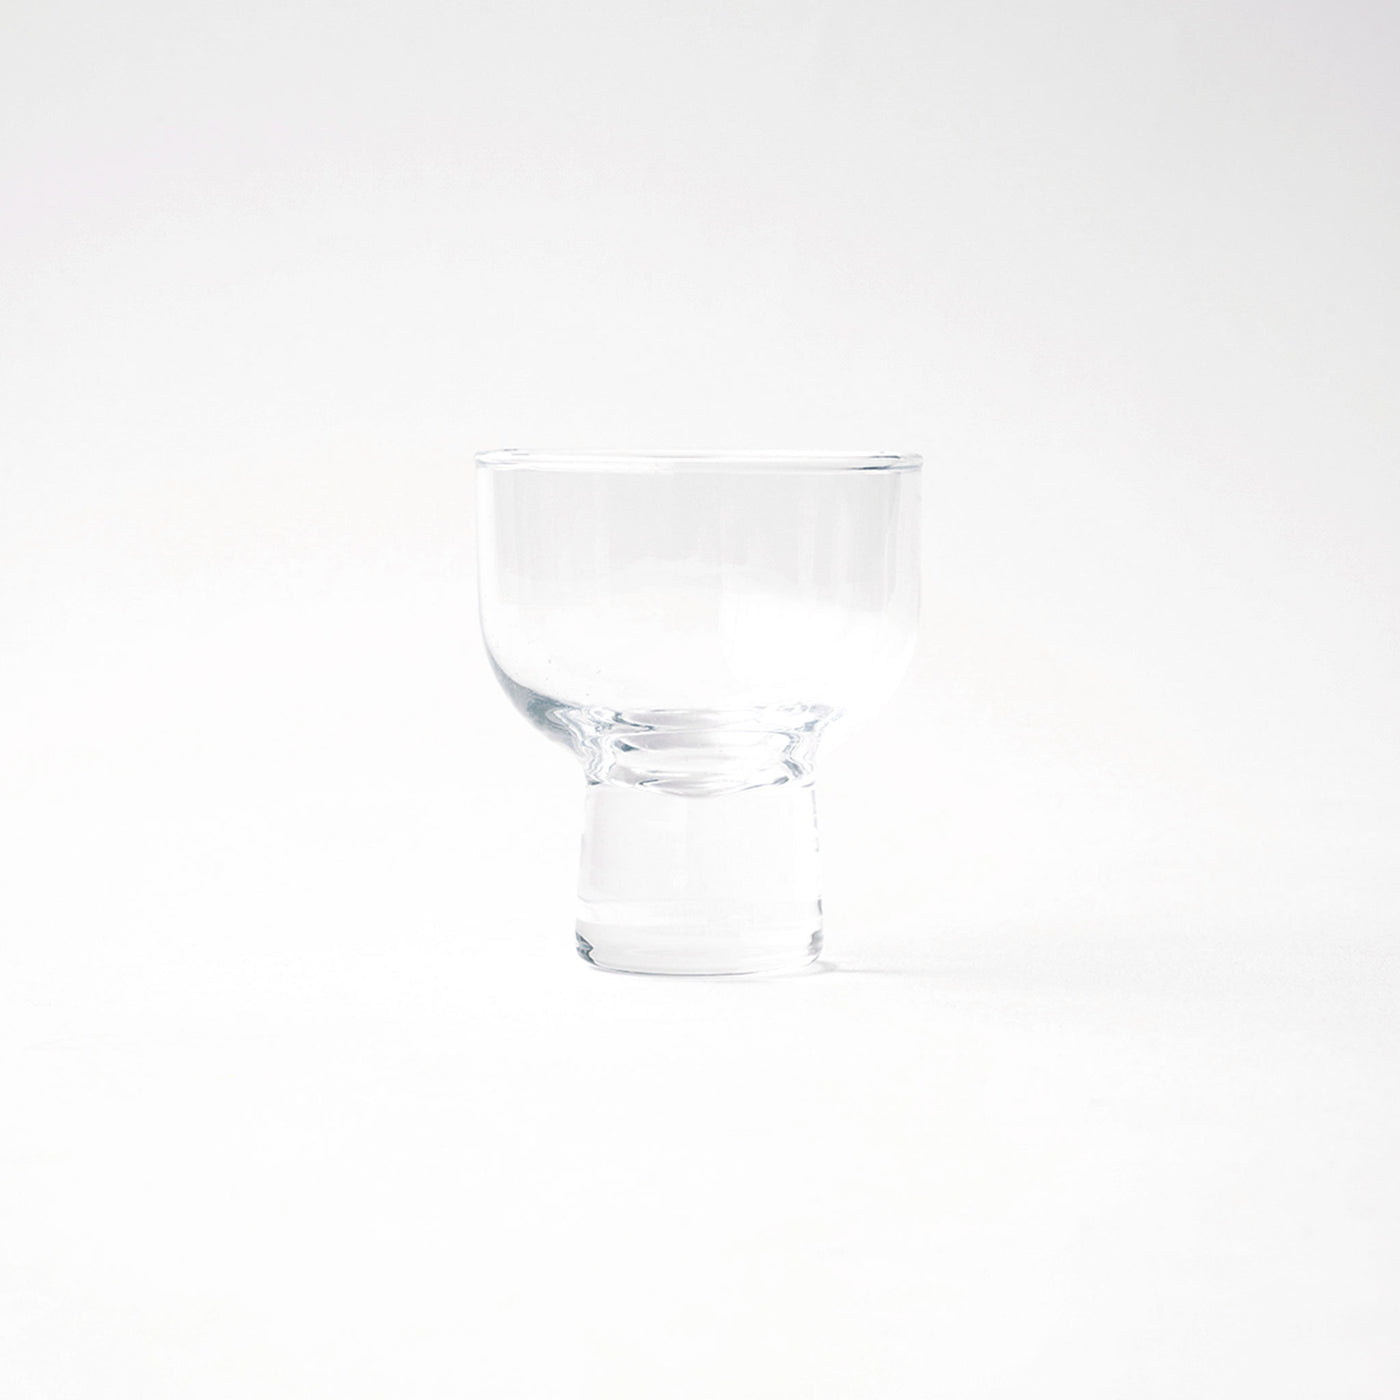 TOYO SASAKI GLASS / SAKE CUP (6 PCS SET)